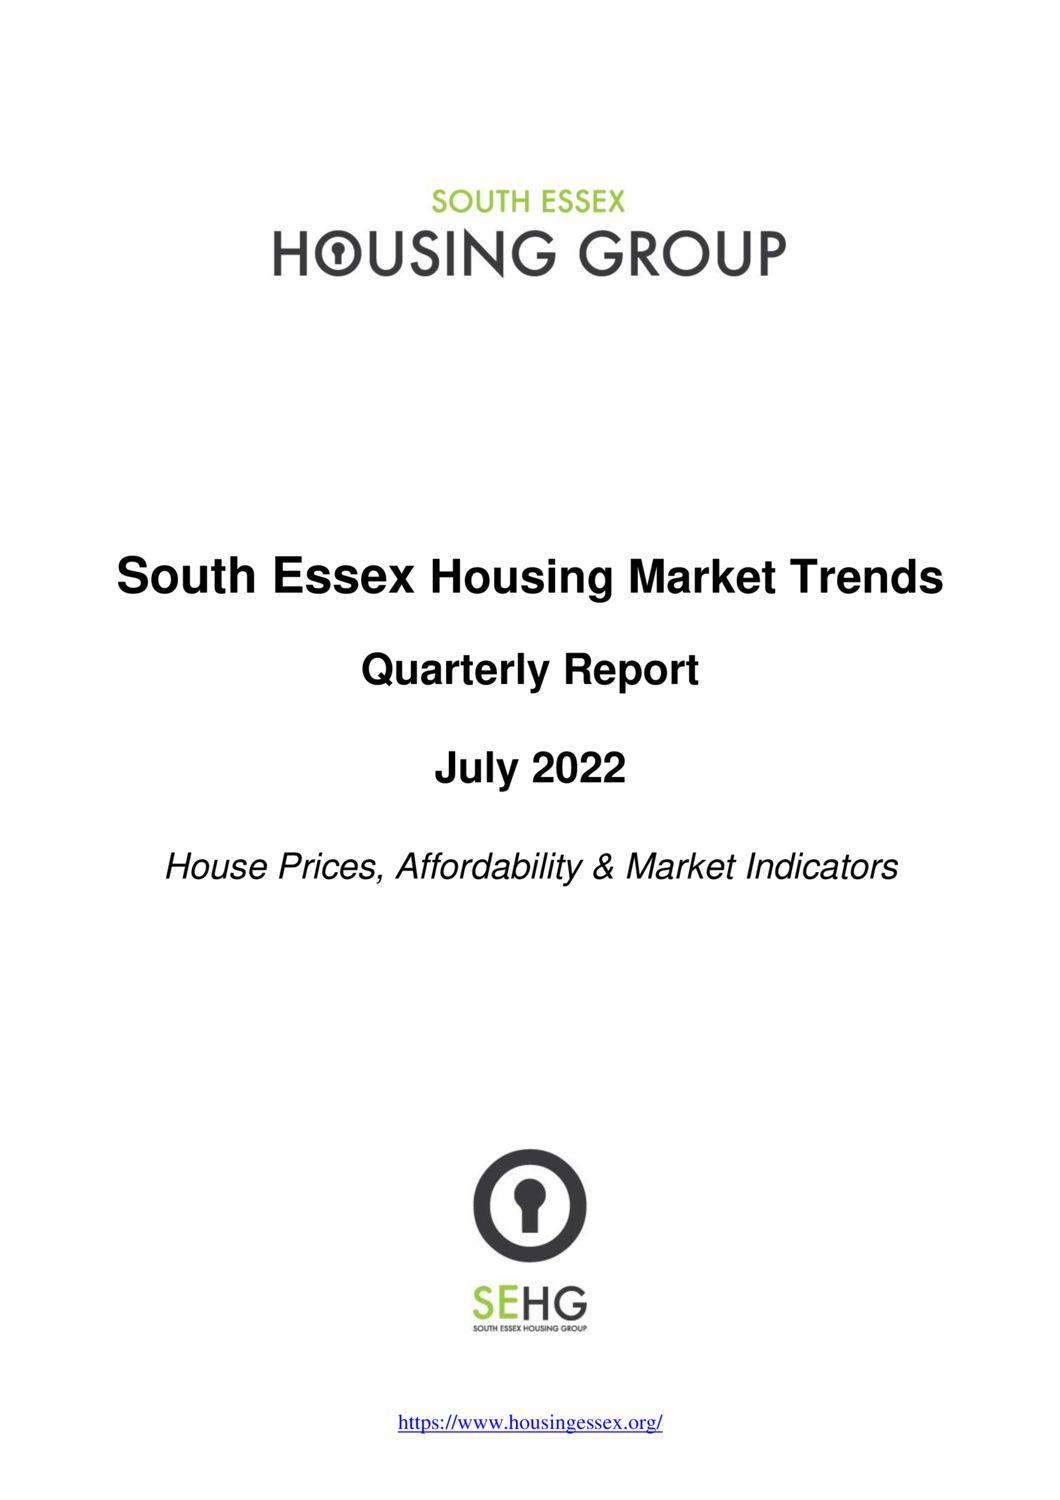 South Essex Housing Market Trends Report July 2022